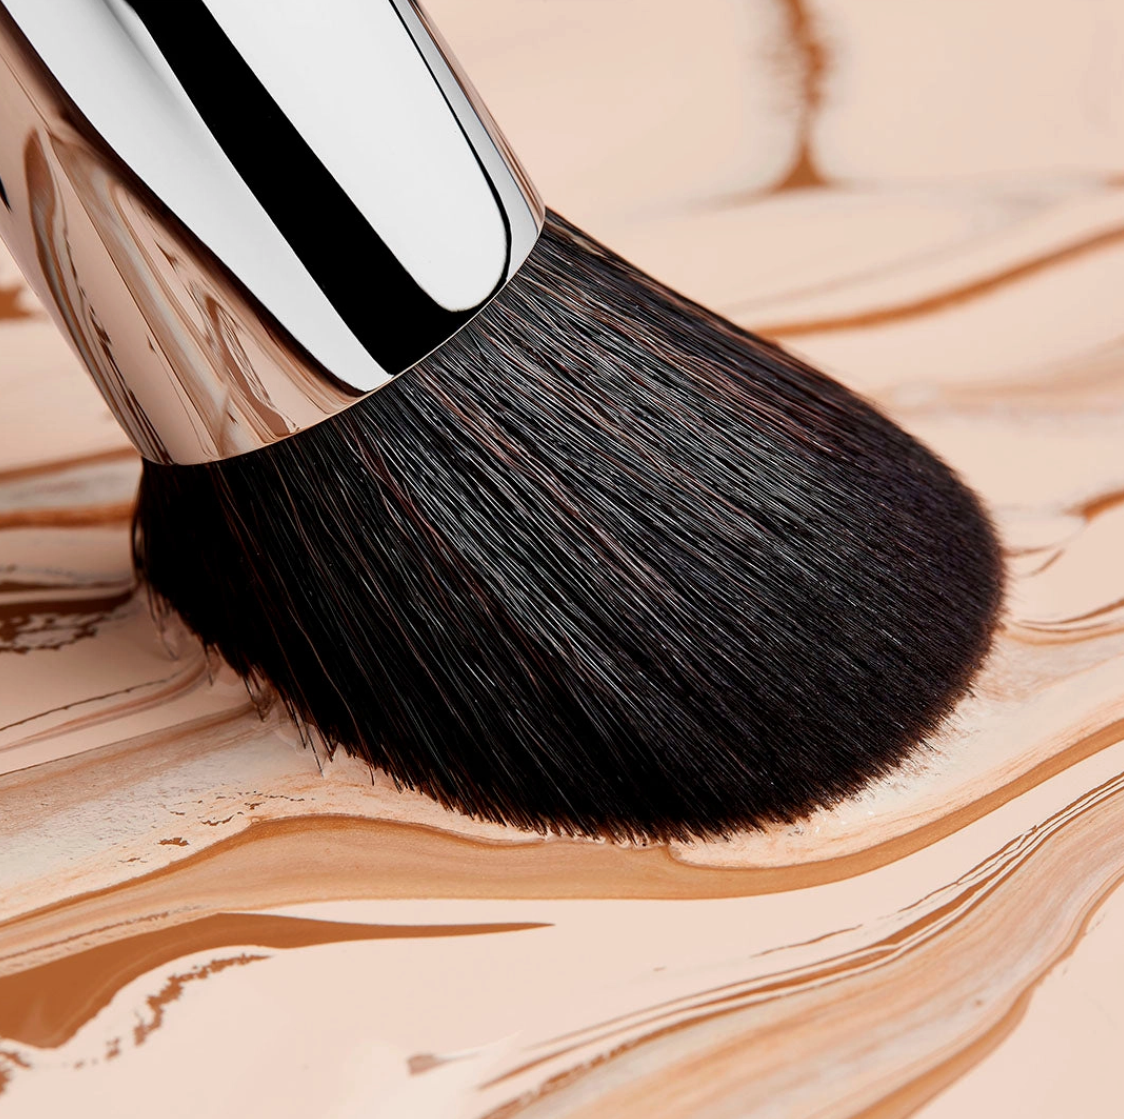 Sigma Beauty (F85) Airbrush Kabuki Brush